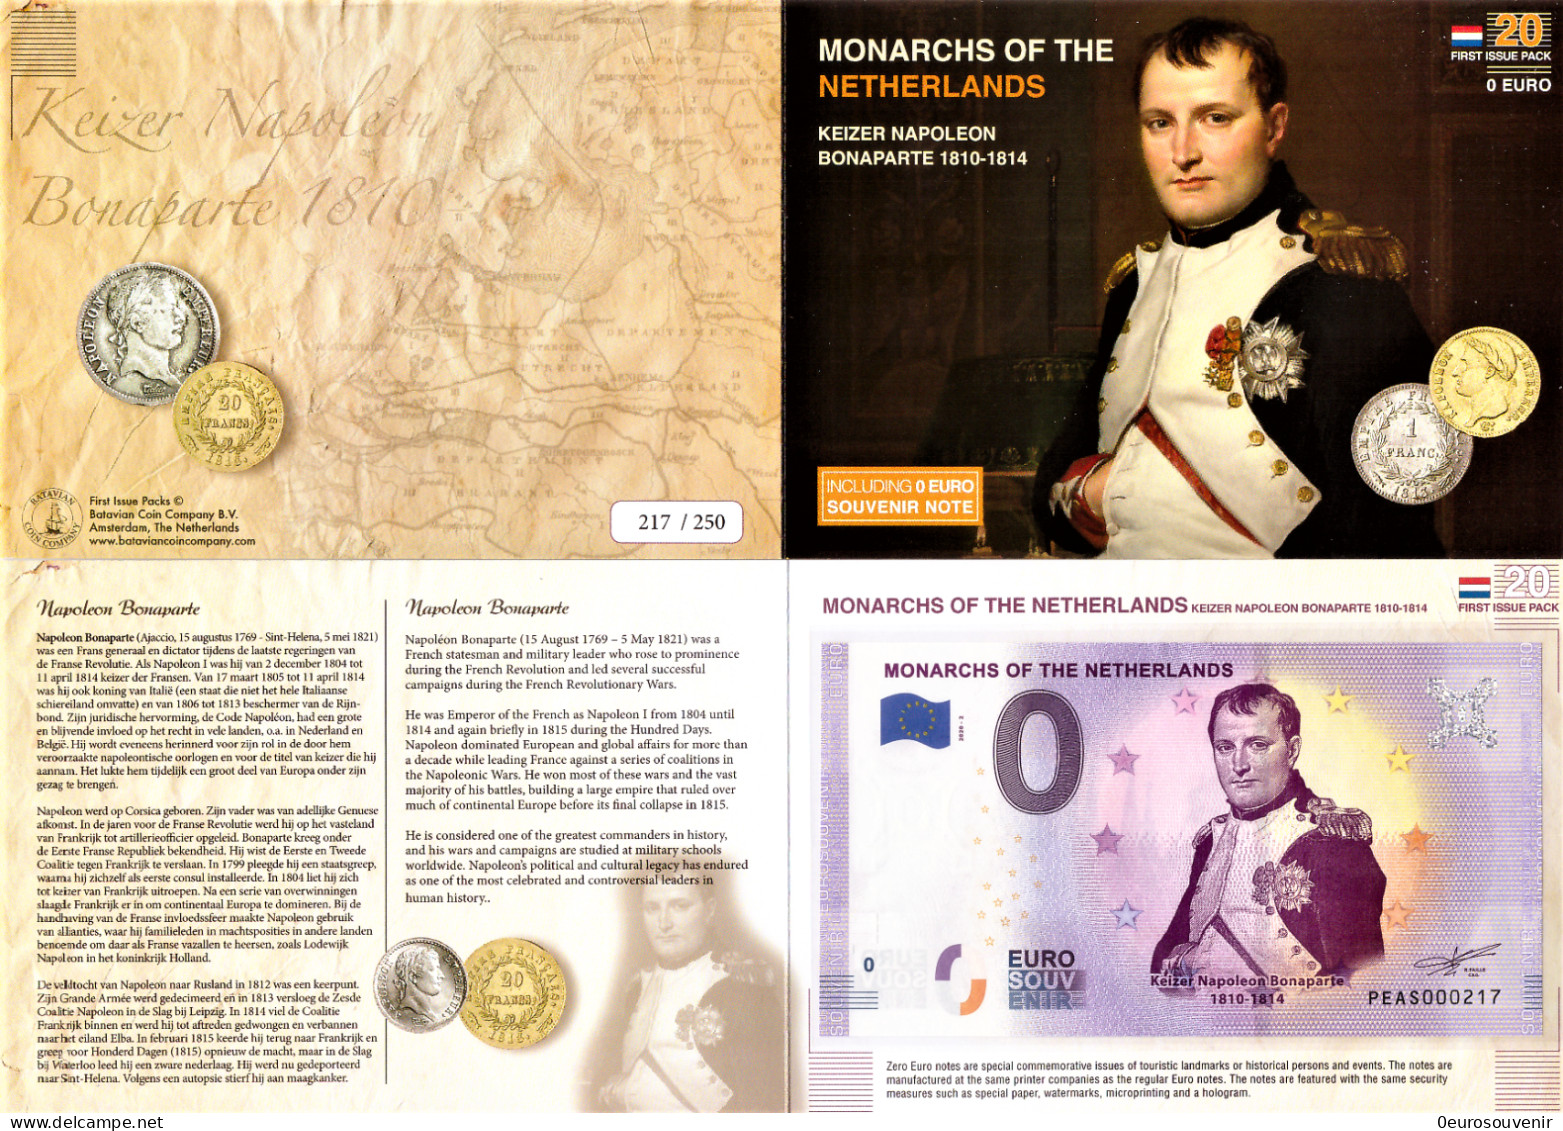 0-Euro PEAS 2020-2 MONARCHS OF THE NETHERLANDS NAPOLEON BONAPARTE 1810-1814 First Issue Pack No. Nur Bis #250 ! - Privatentwürfe